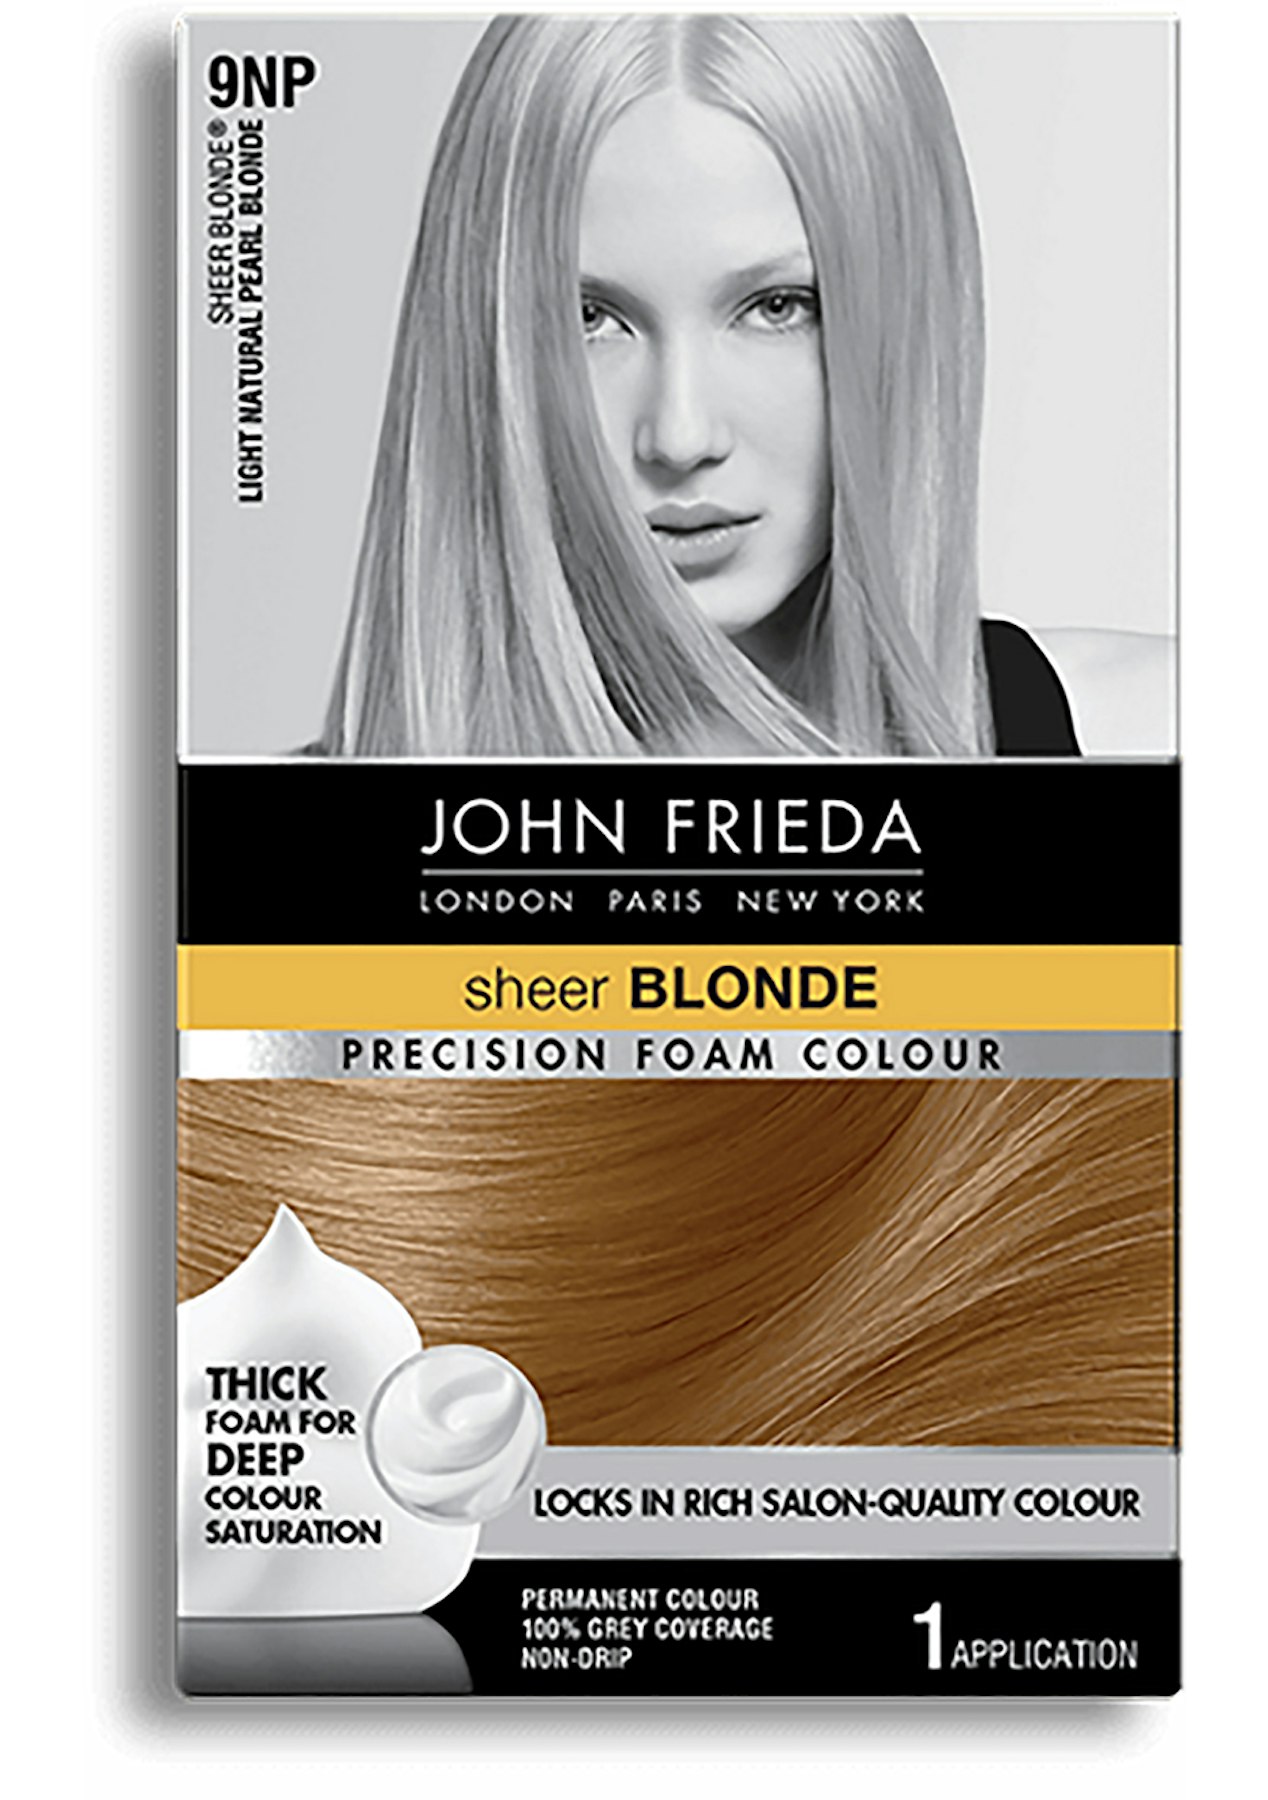 John Frieda Precision Foam Colour 9NP - Light Natural Pearl Blonde - Onceit